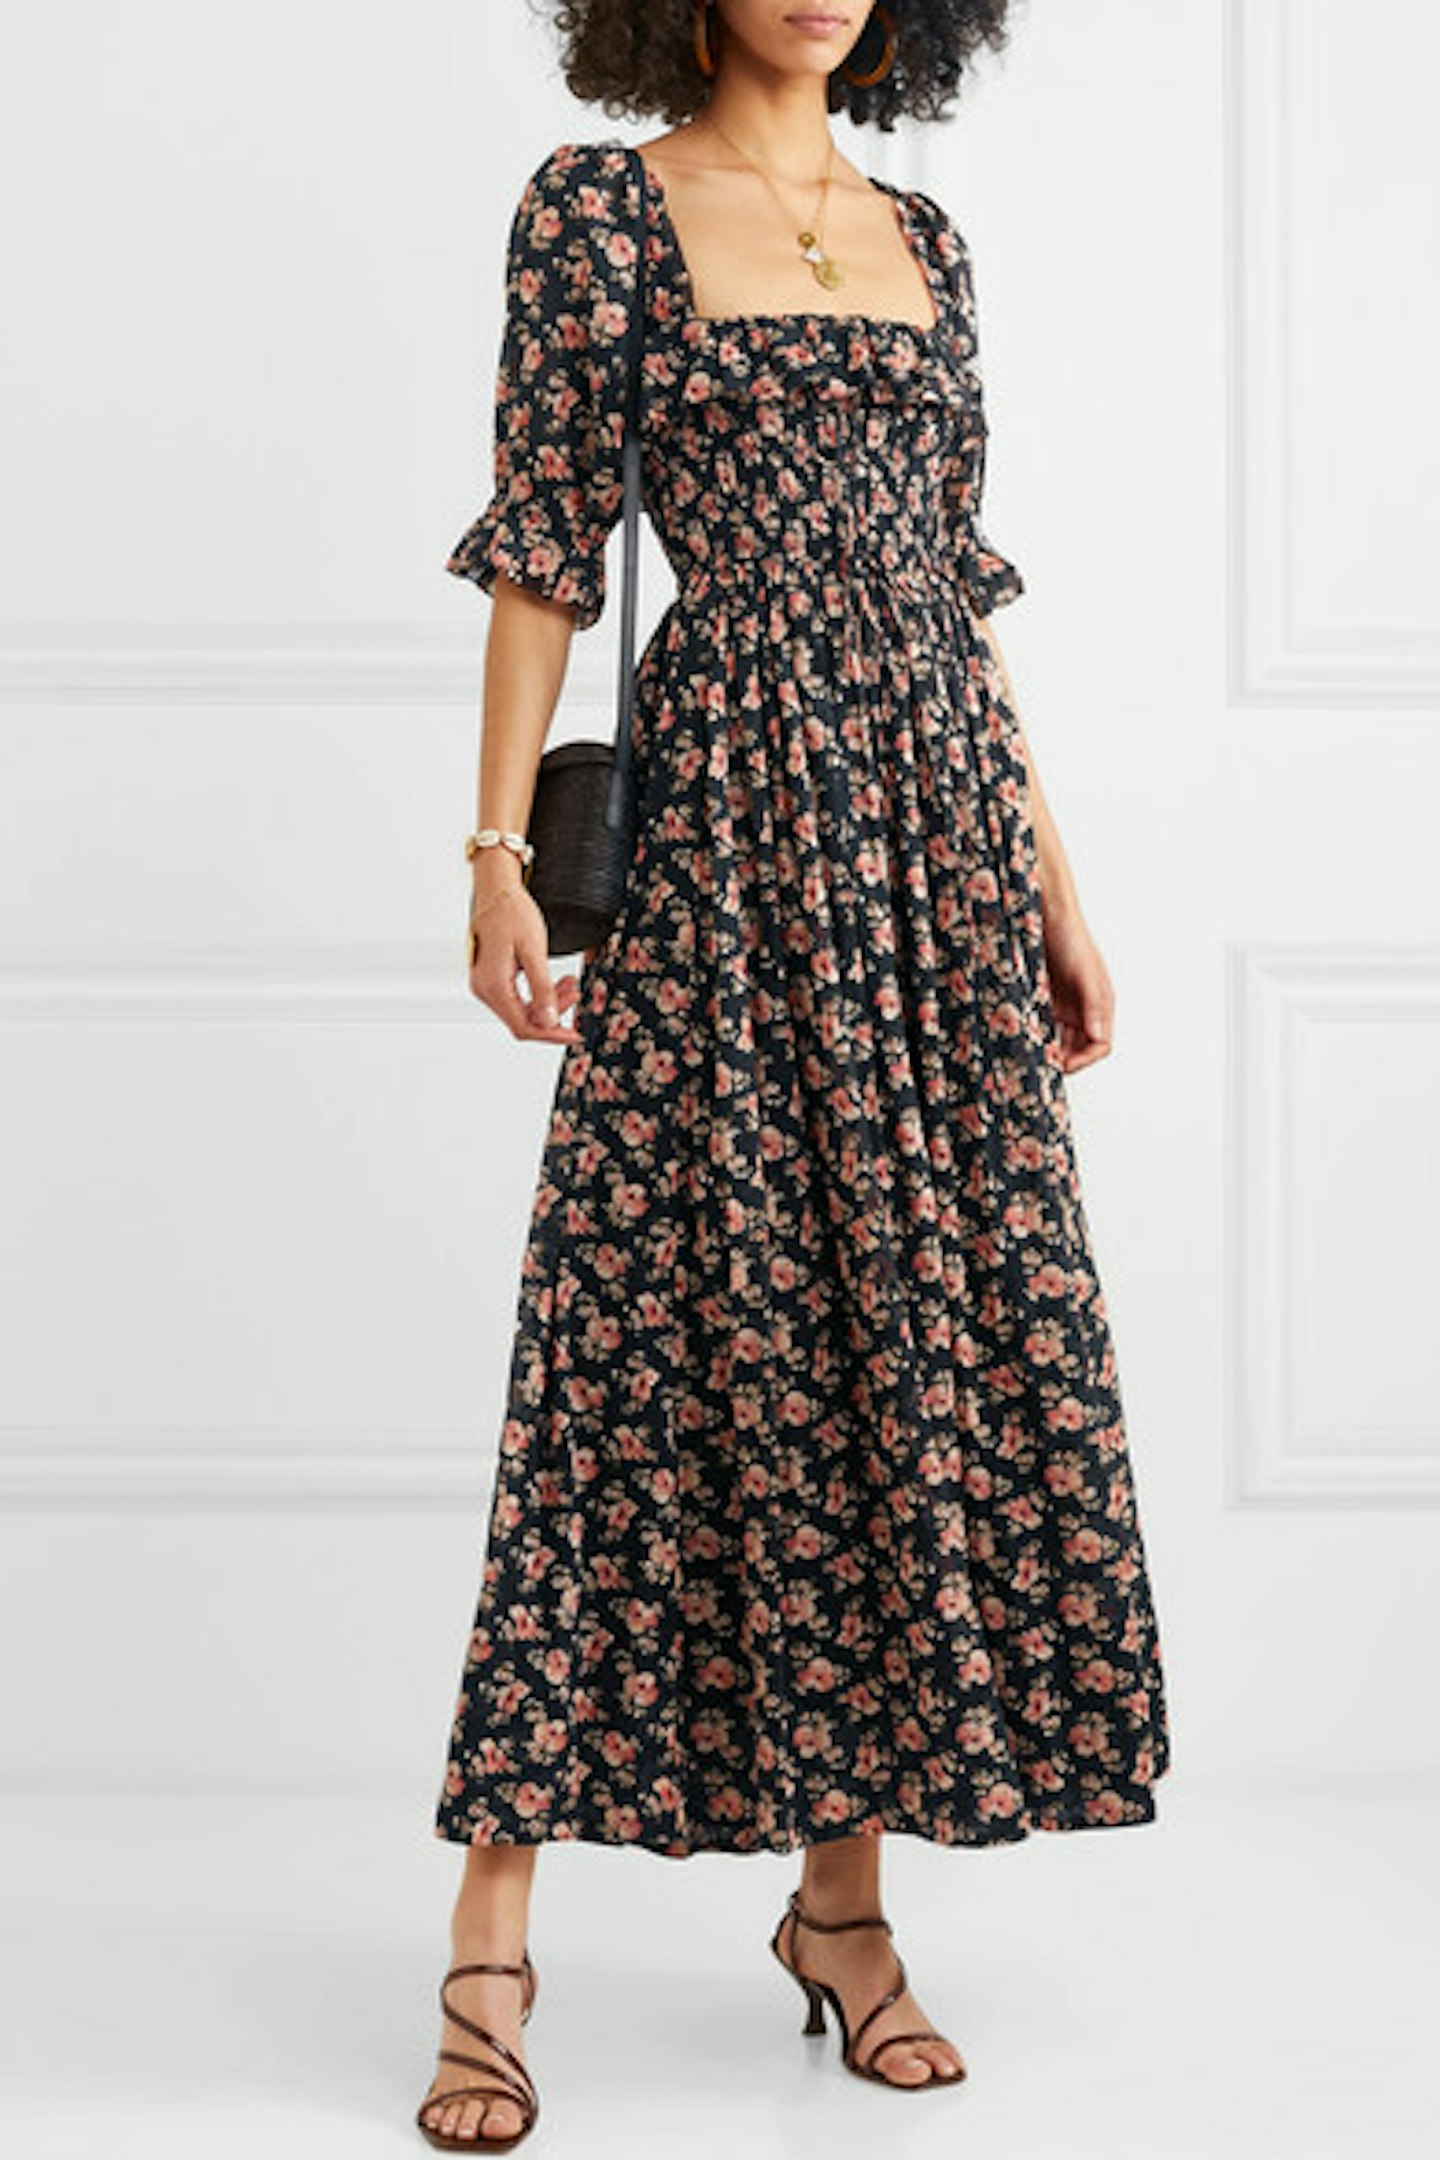 Sol Shirred Floral Maxi Dress, £325